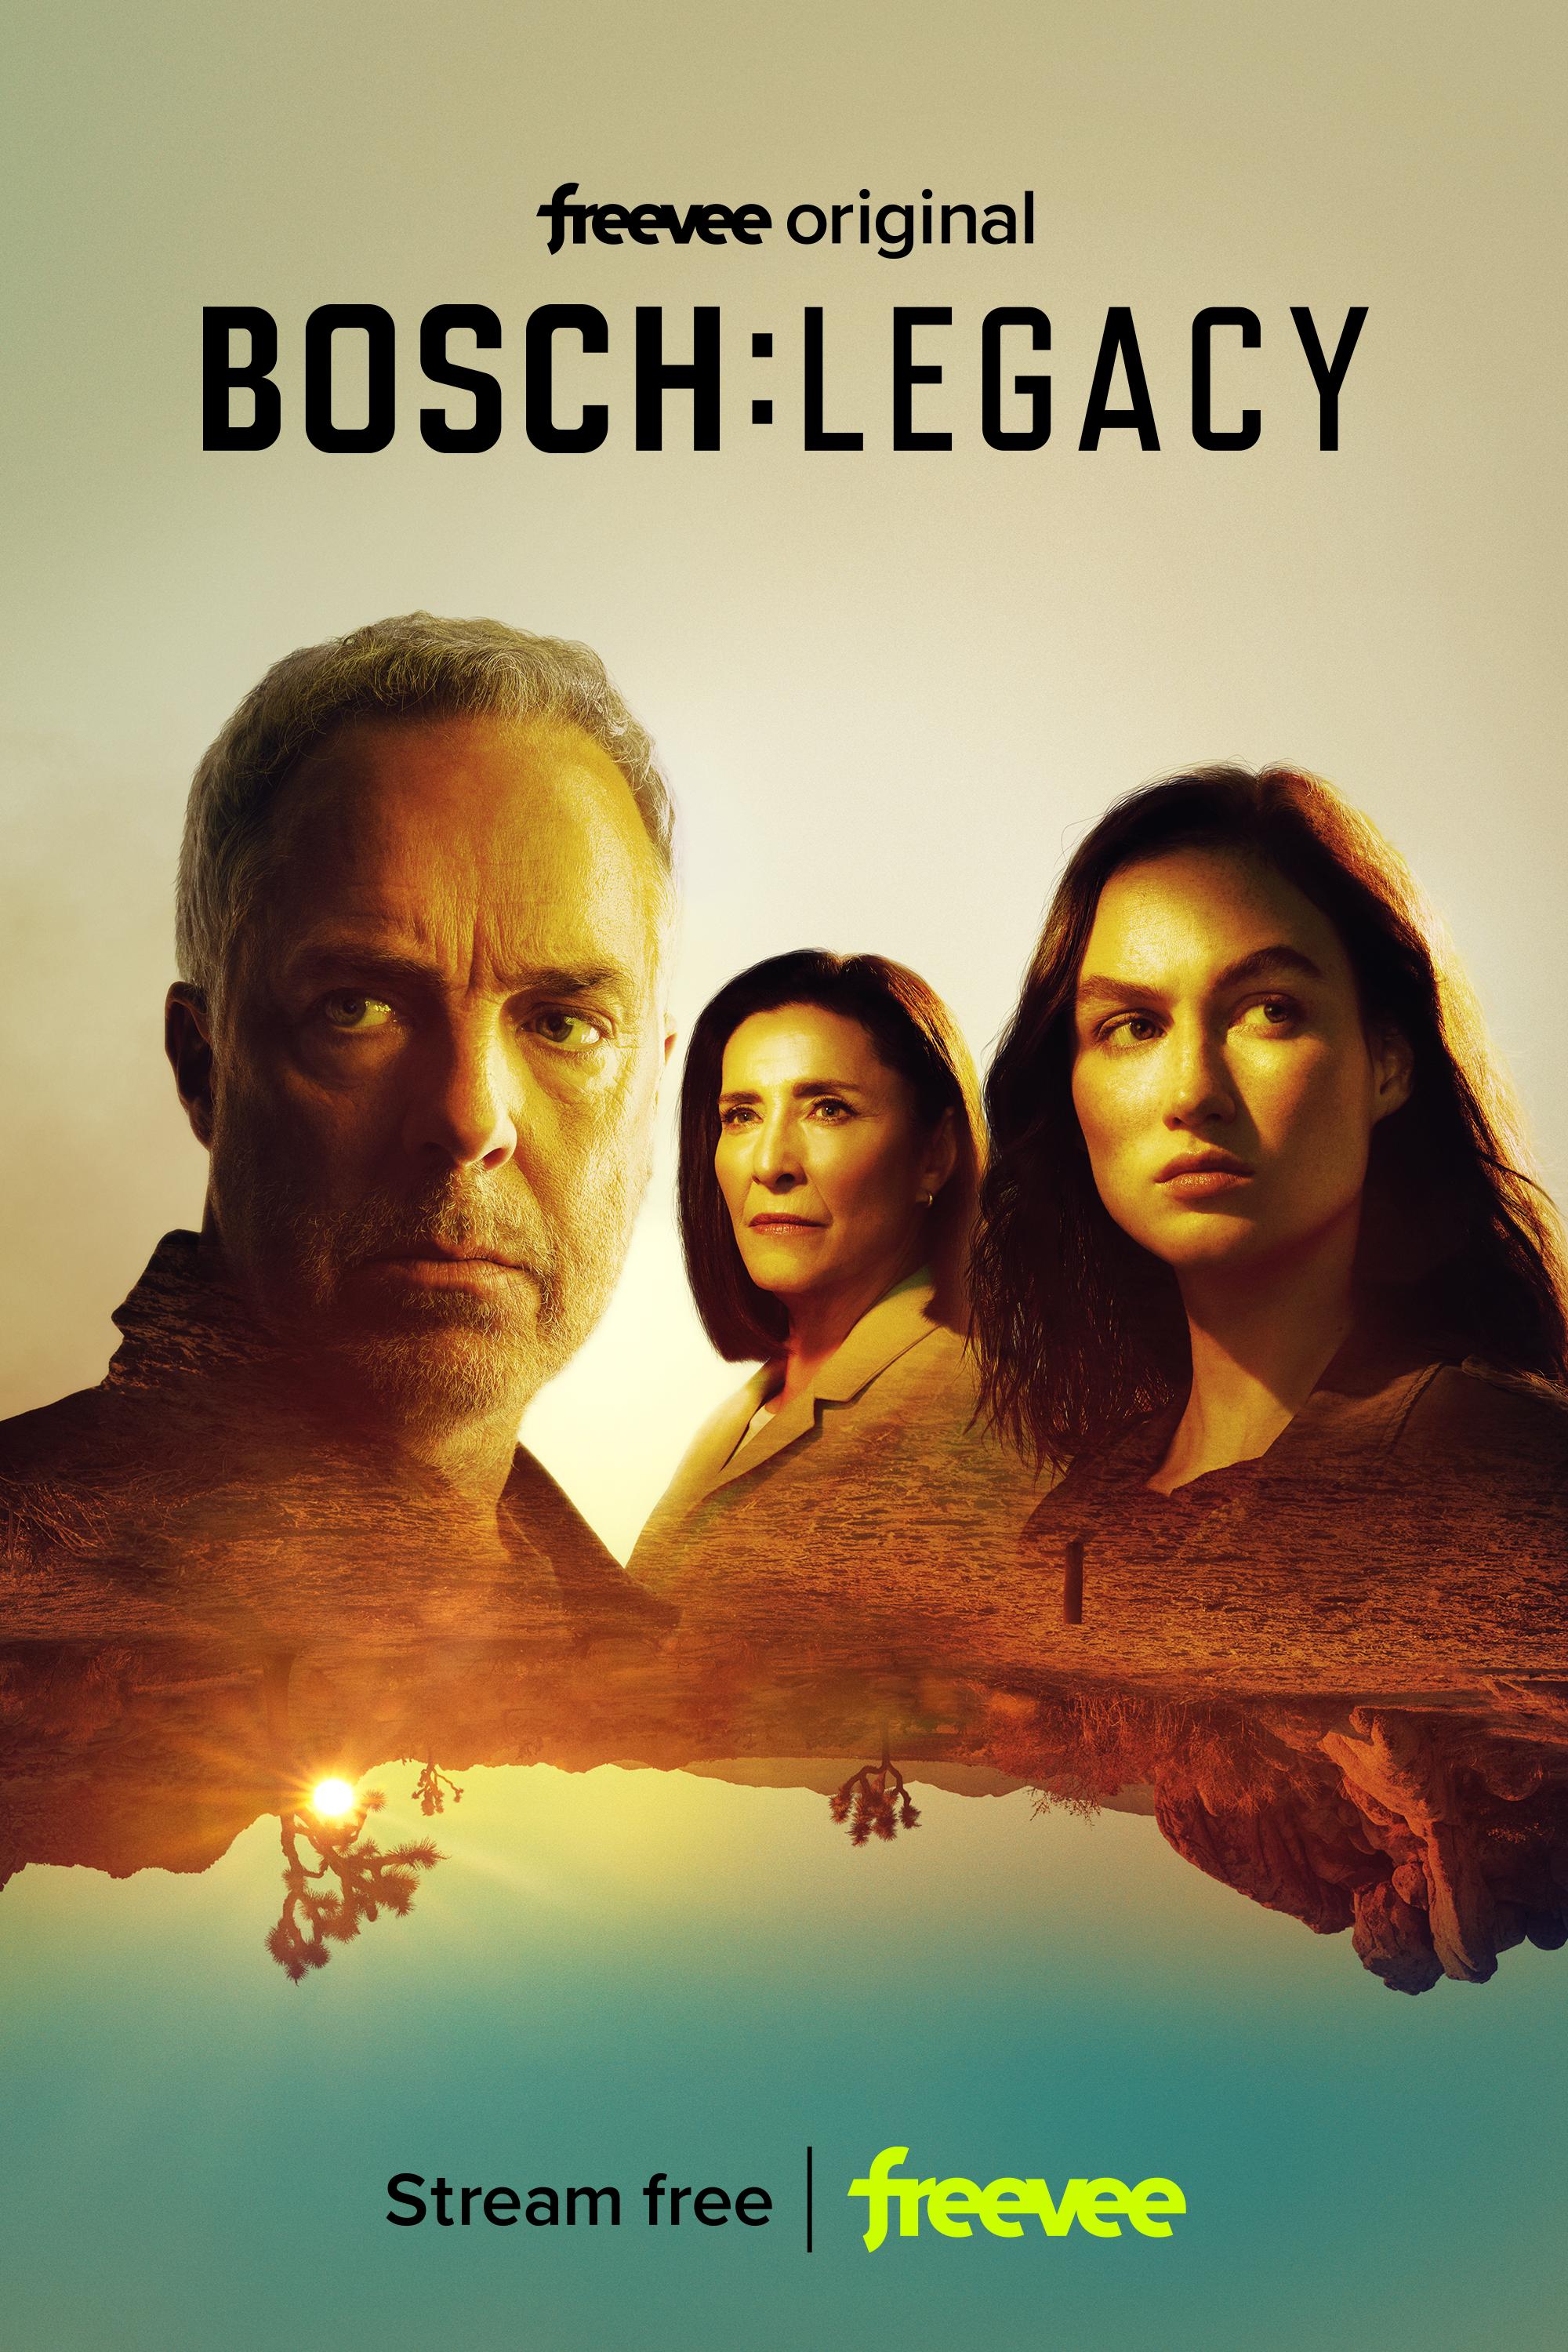 TV ratings for Bosch: Legacy in Irlanda. Amazon Freevee TV series